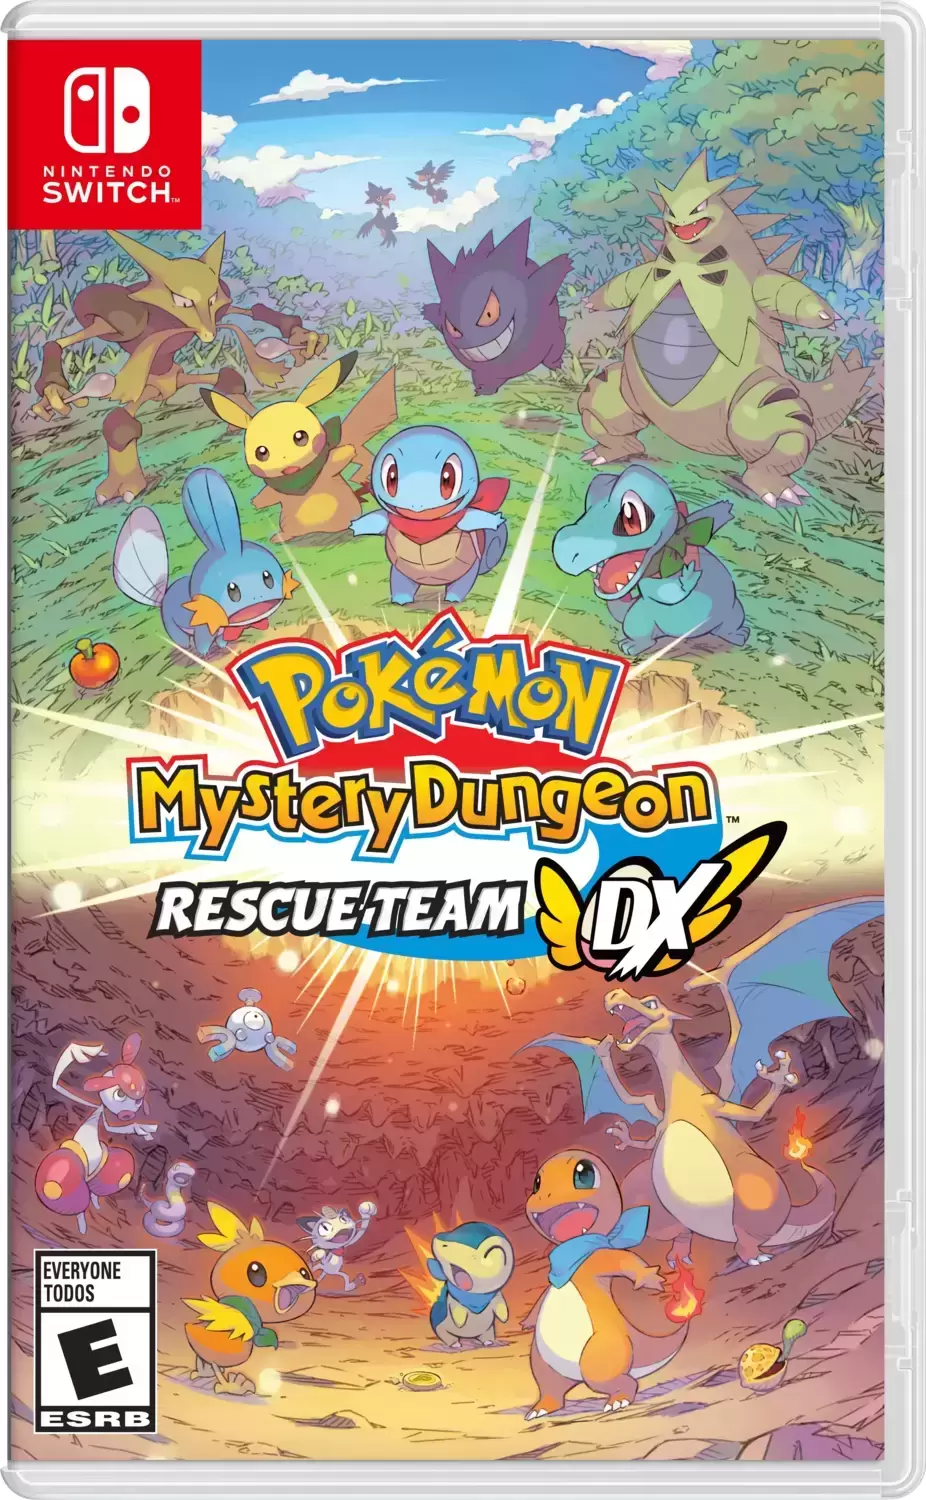 Nintendo Switch Games - Pokemon Mystery Dungeon Rescue Team DX